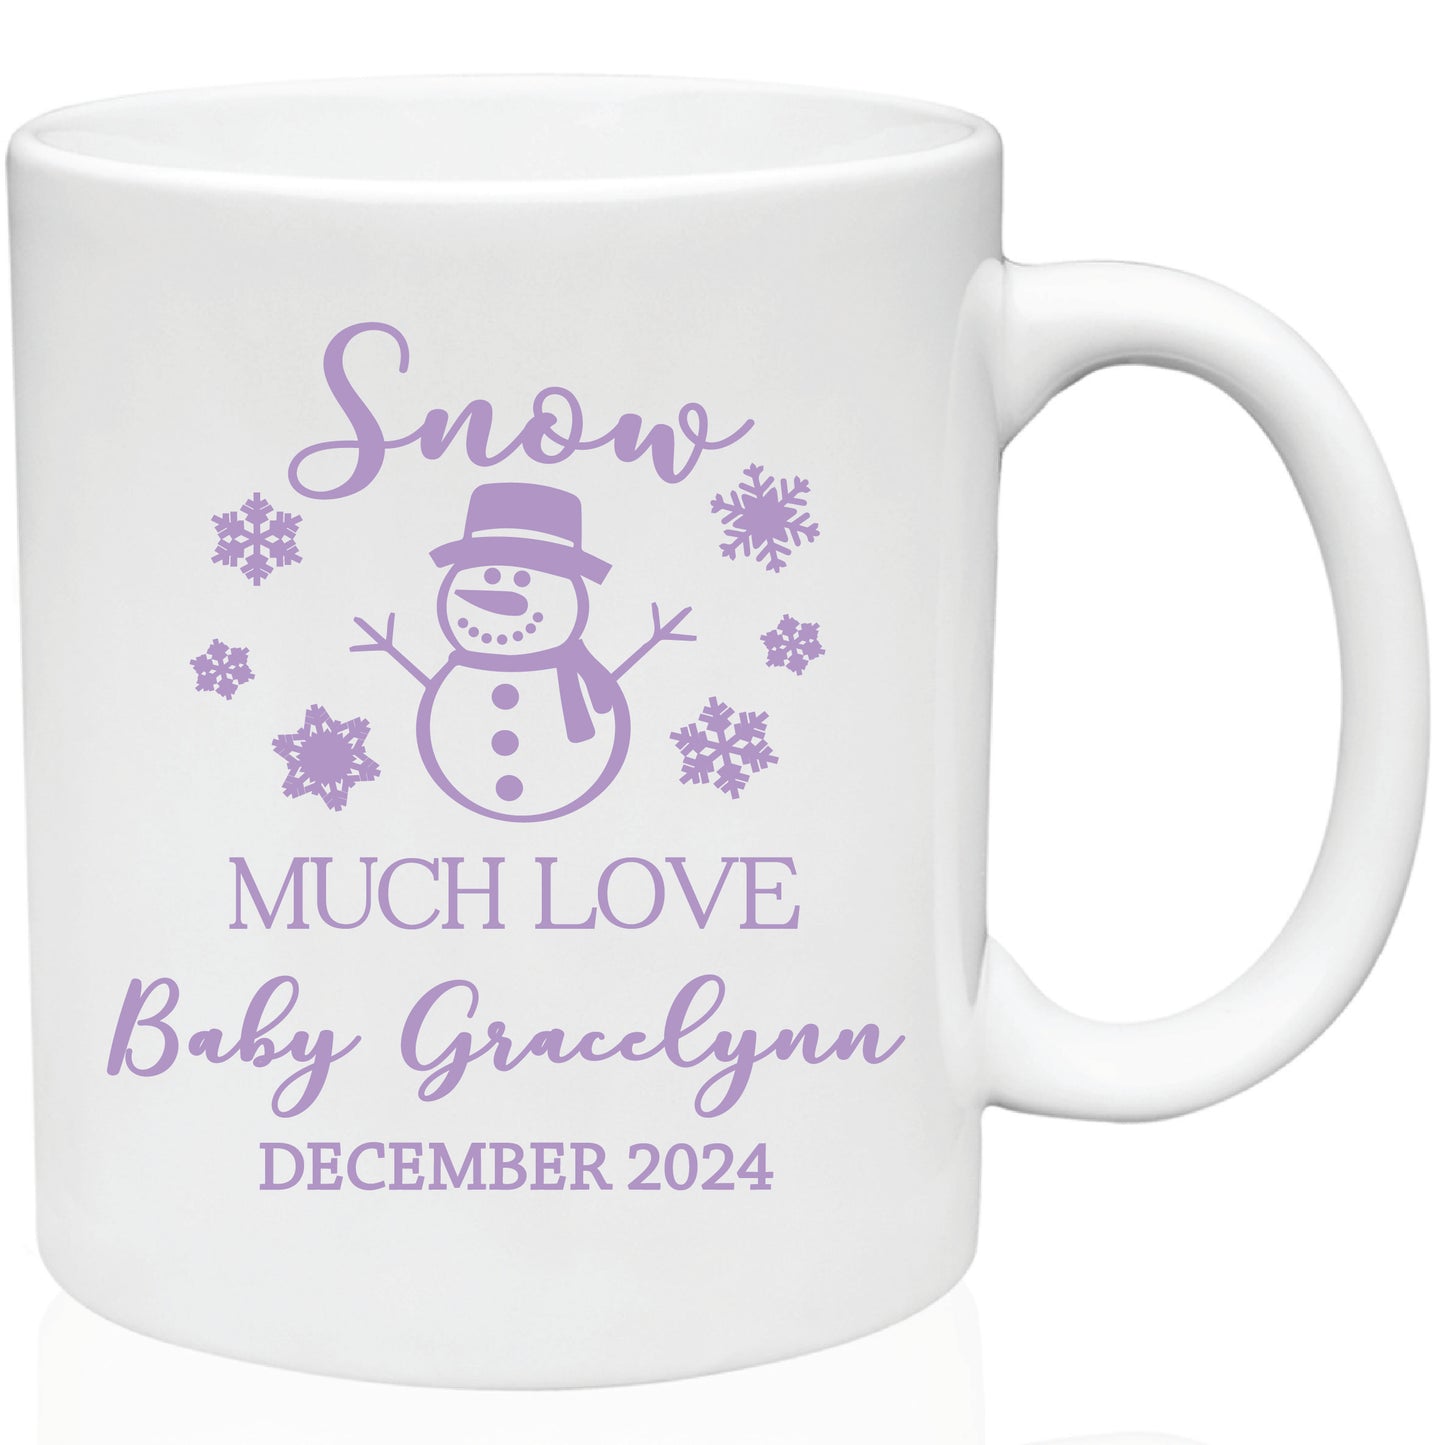 Snow much love- baby shower mugs